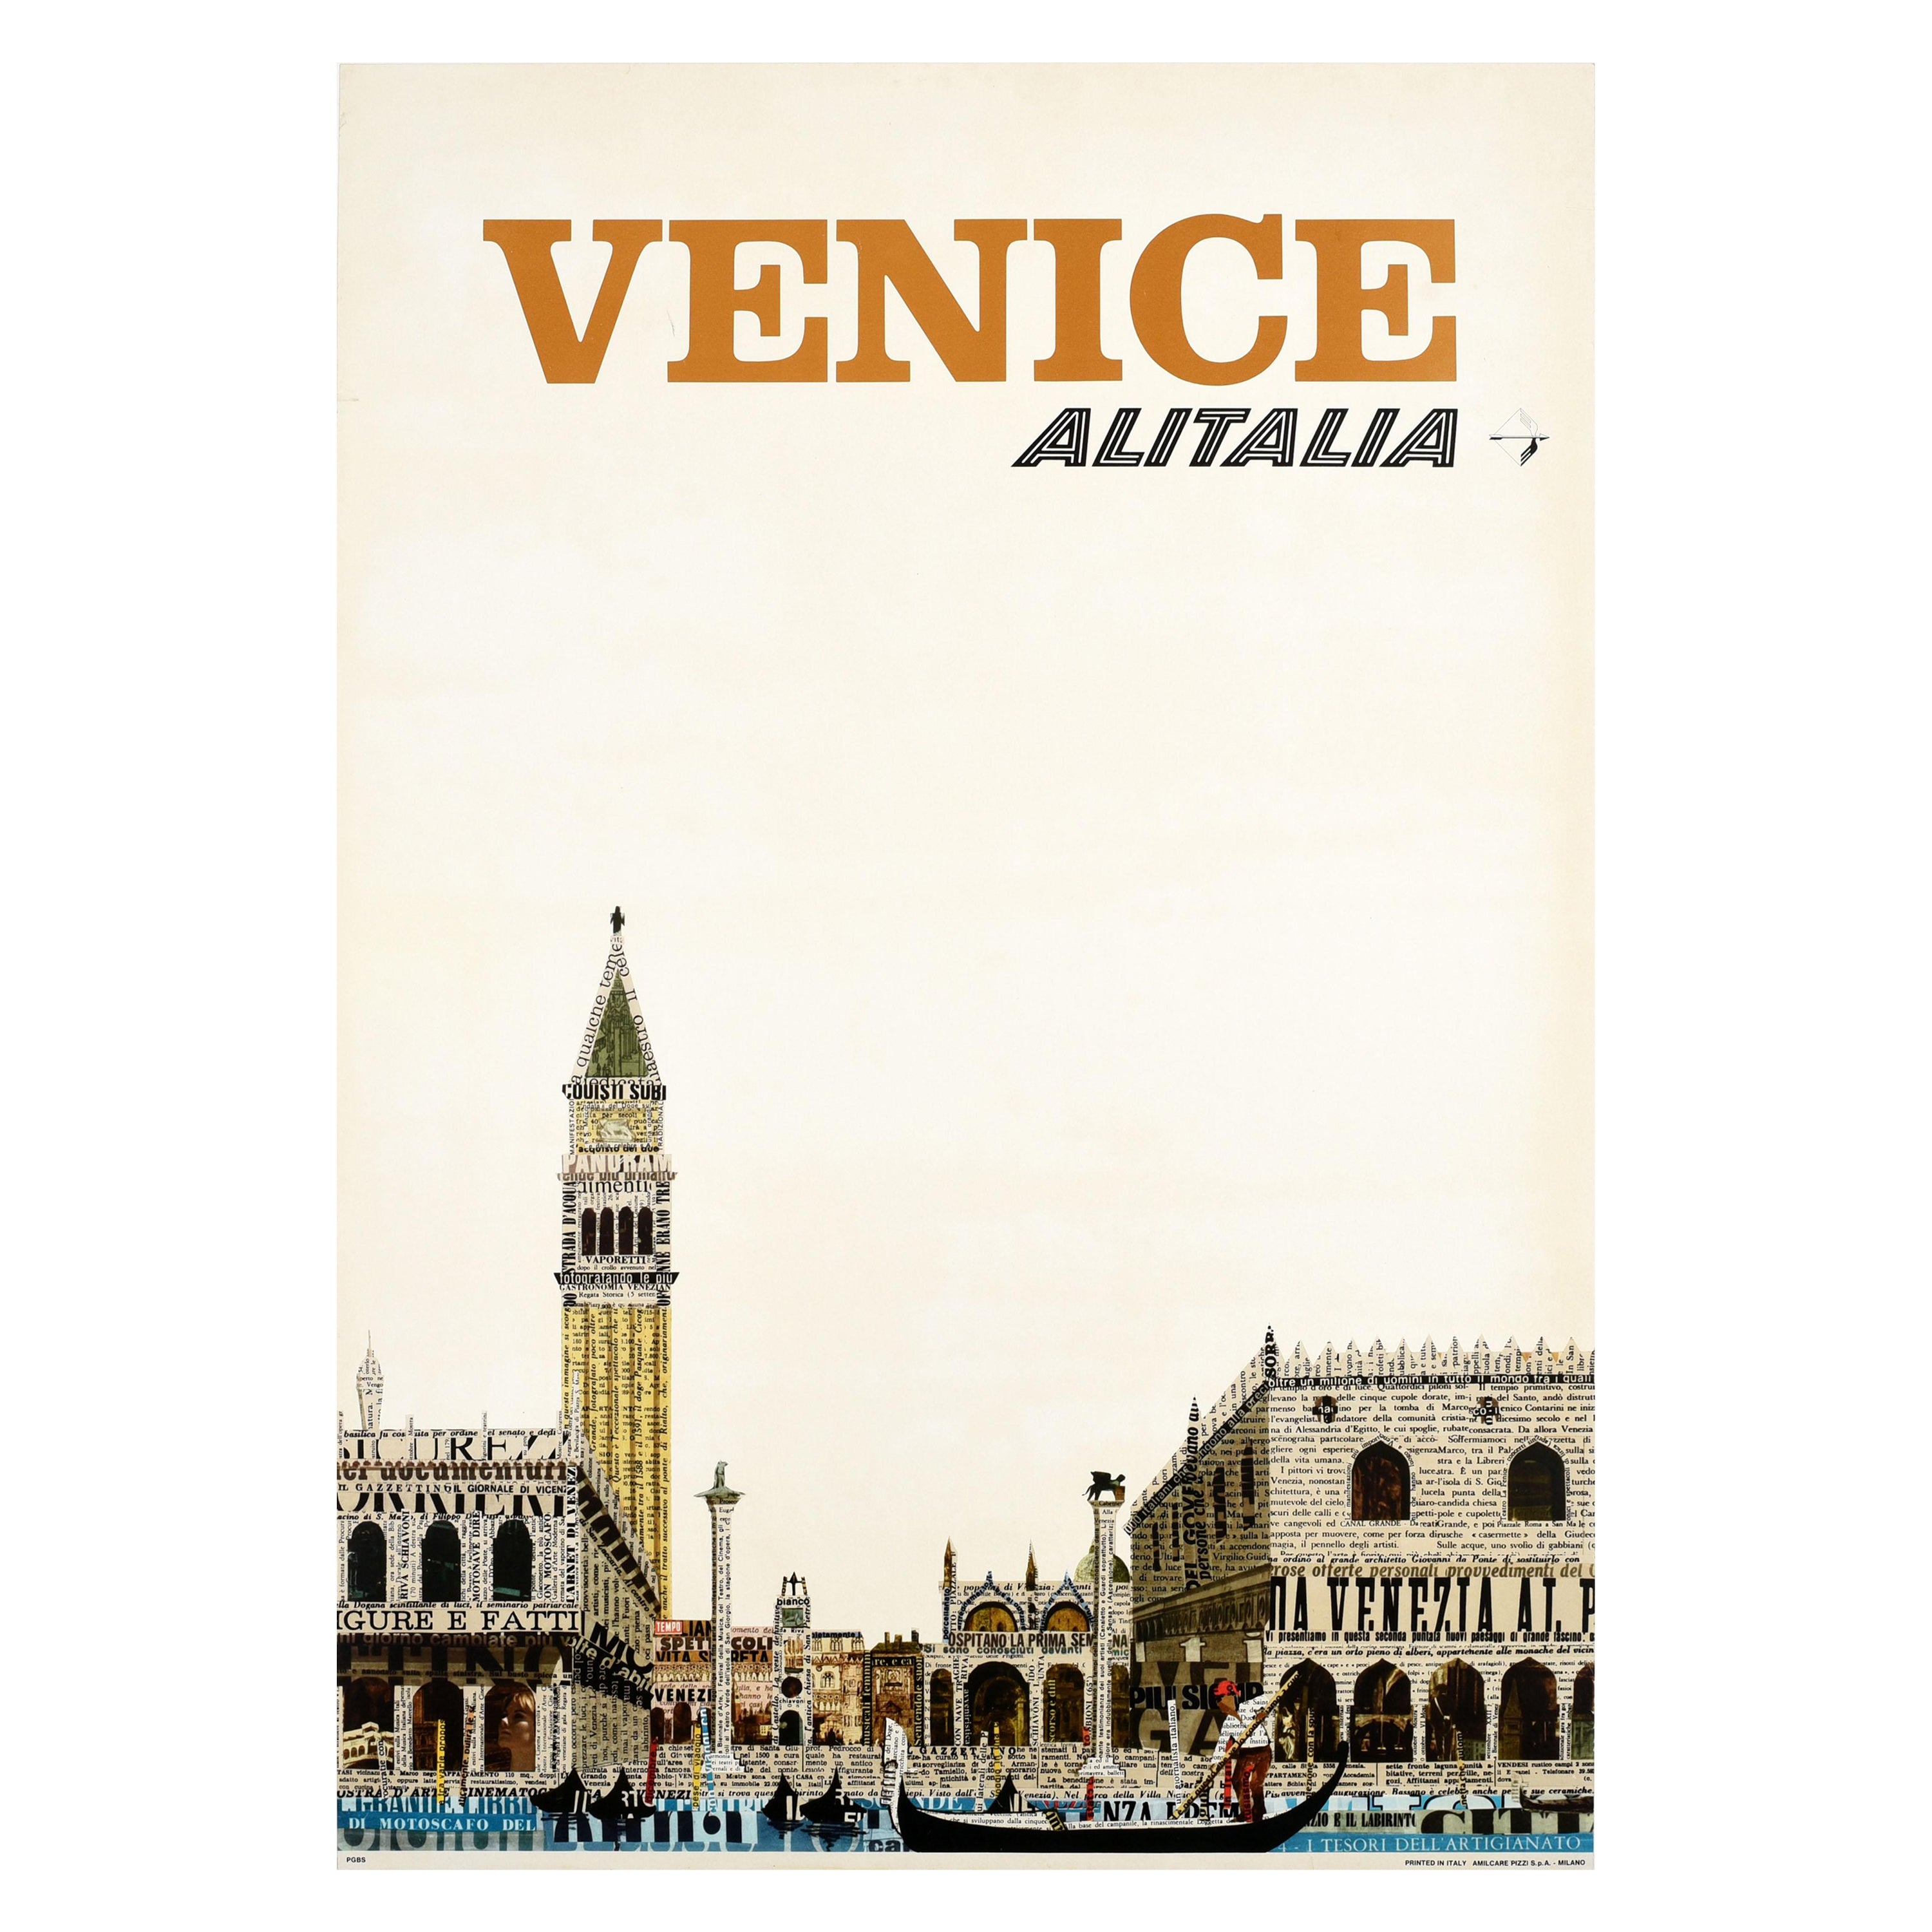 Original Vintage Italy Travel Poster Venice Alitalia St Mark's Square Gondola